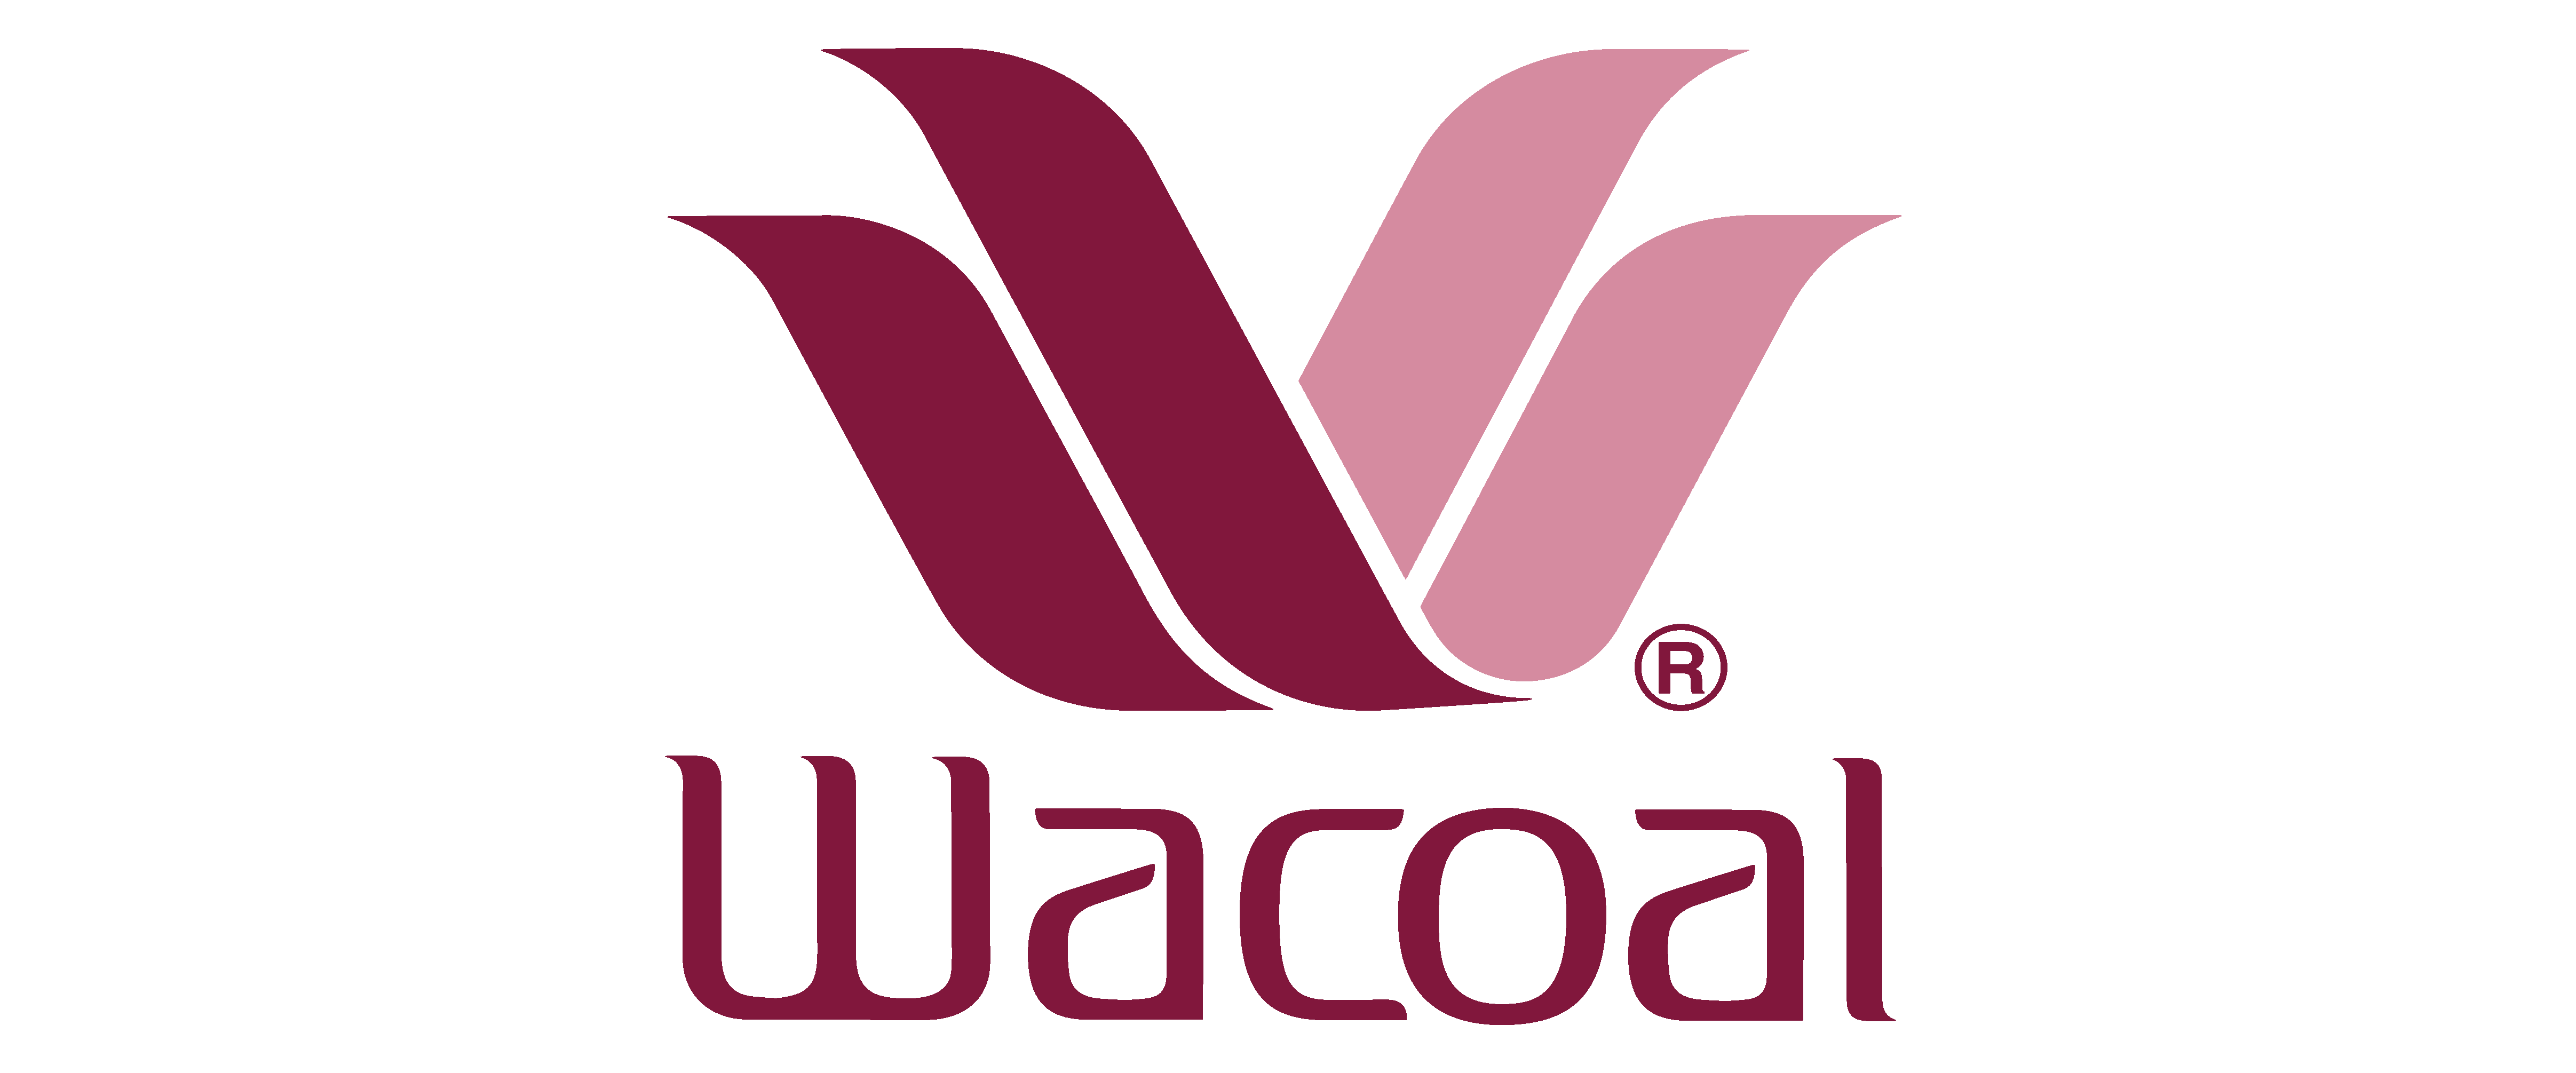 Wacoal Logo - Wacoal : The Soul of lingerie | Blog Lingerie